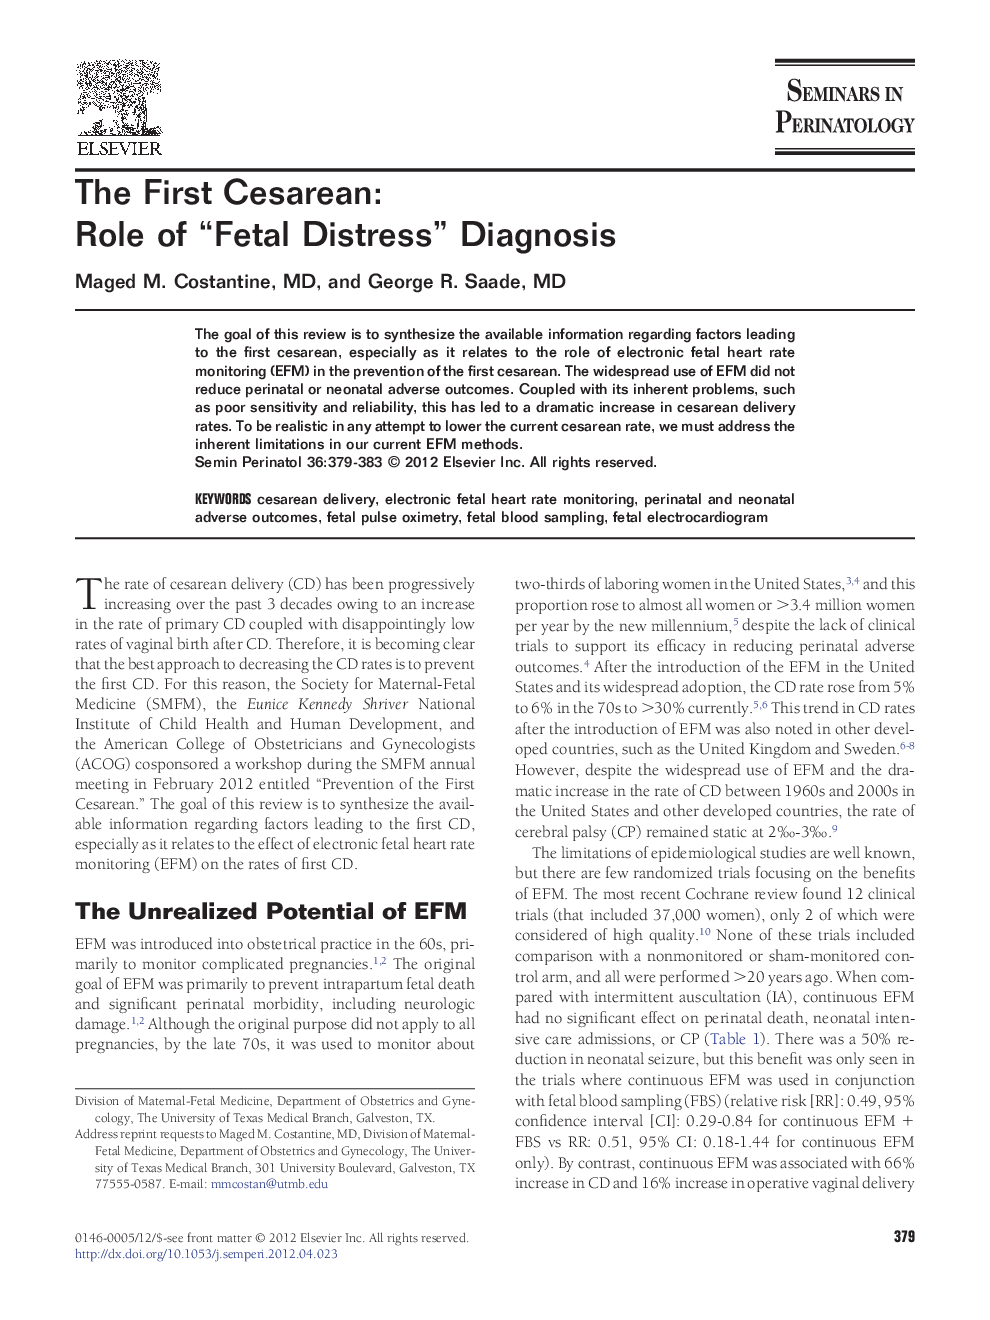 The First Cesarean: Role of “Fetal Distress” Diagnosis